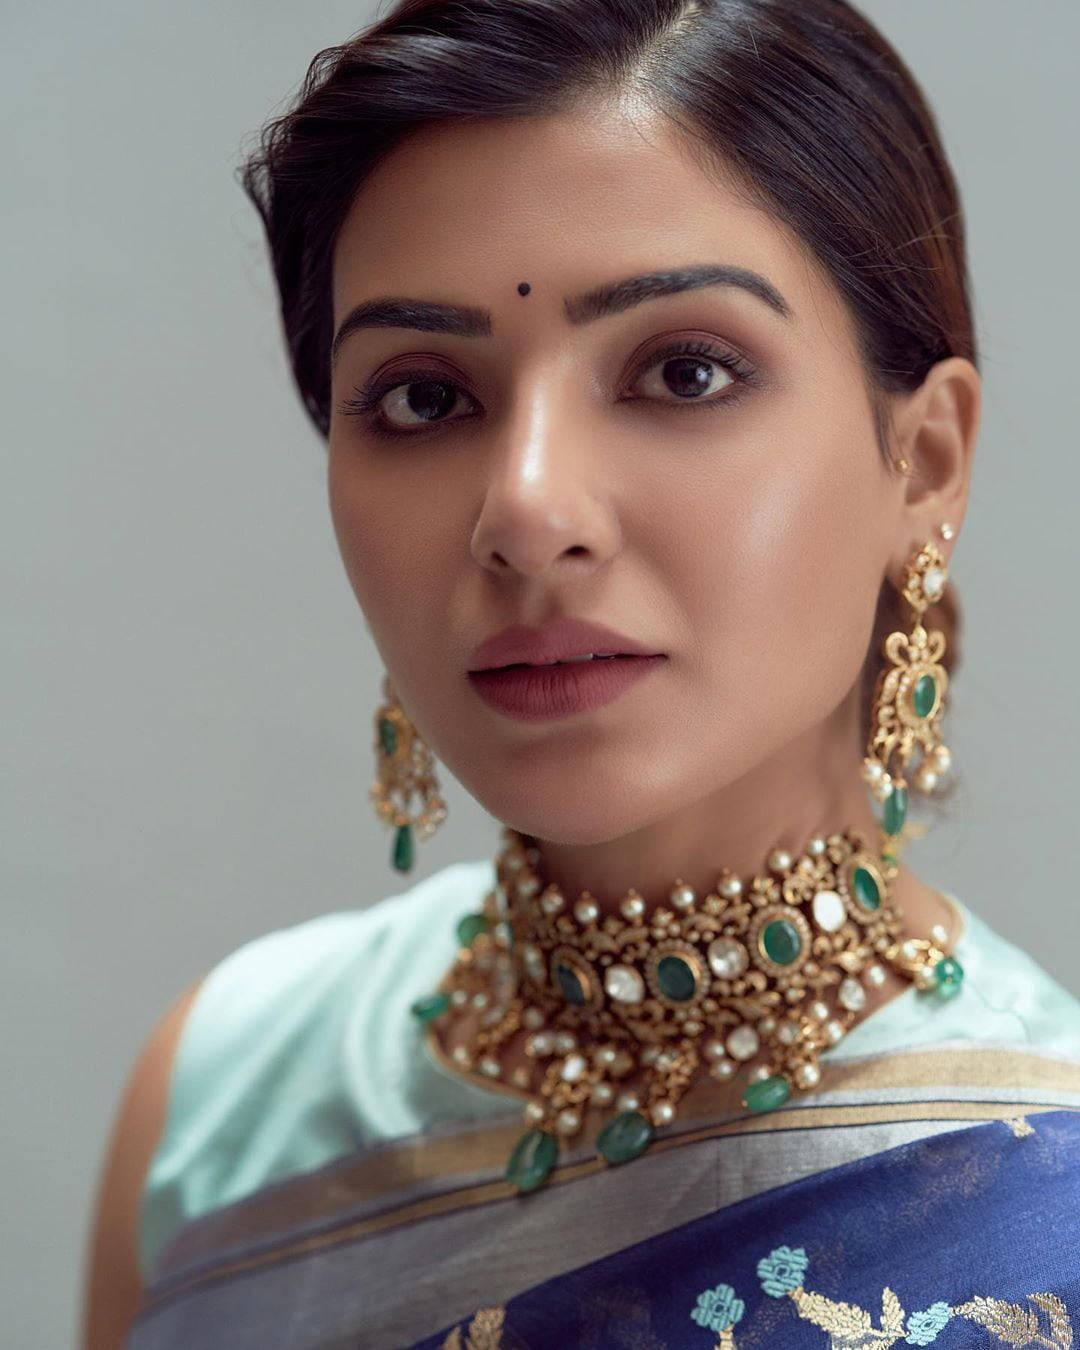 Samantha Stunning In A Blue Saree Close-up Wallpaper